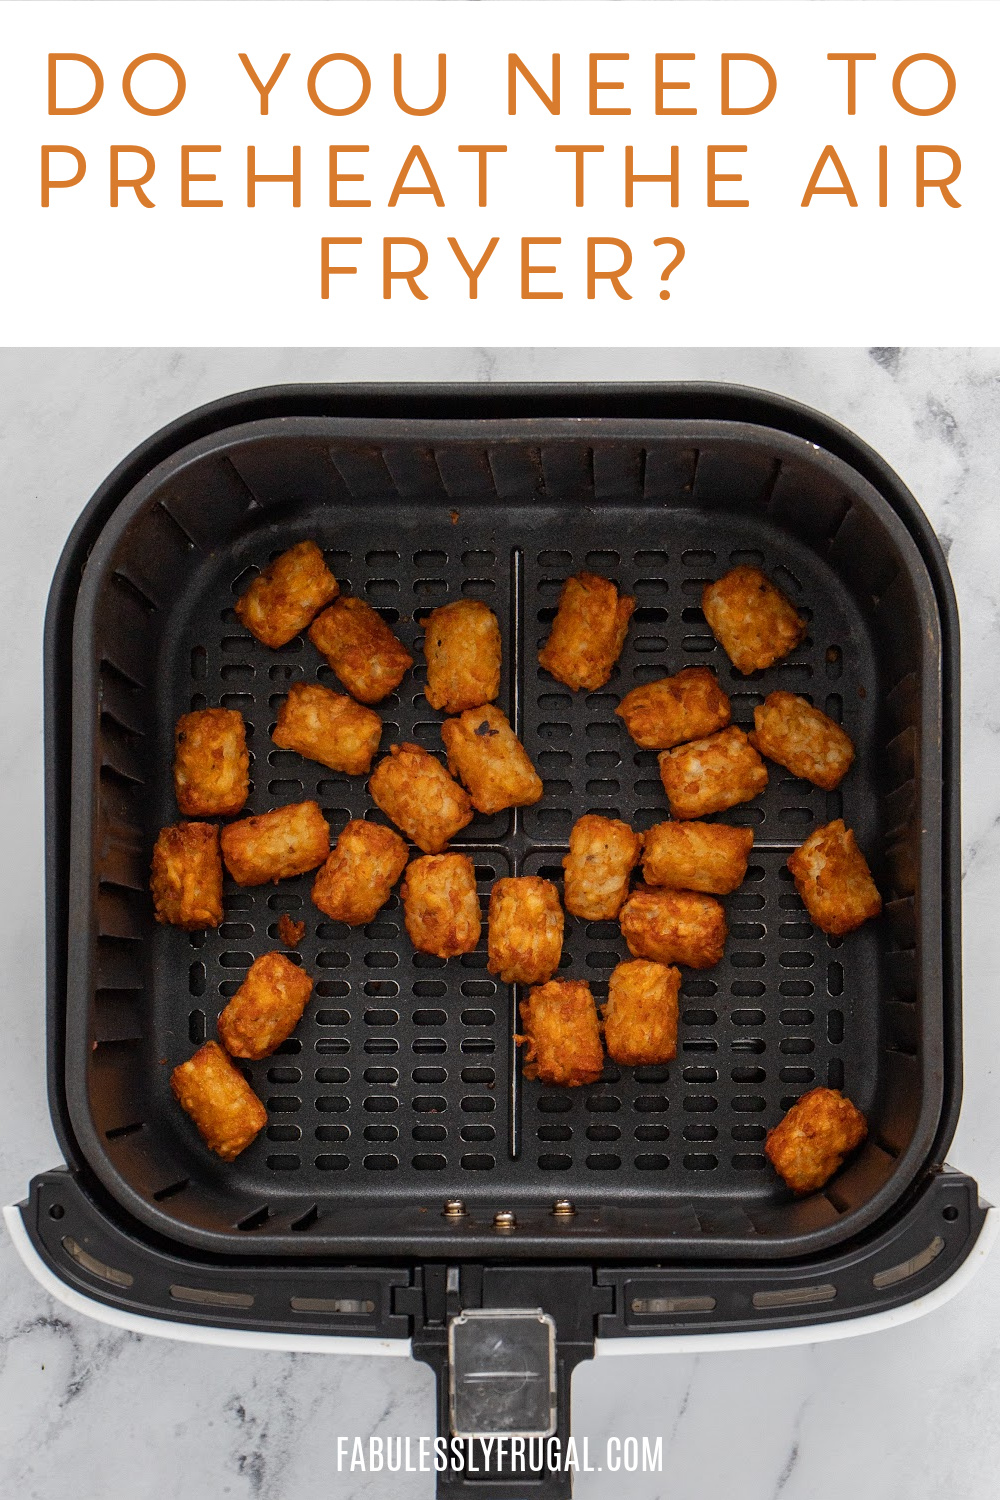 Air Fryer tips: How to preheat an air fryer - Reviewed